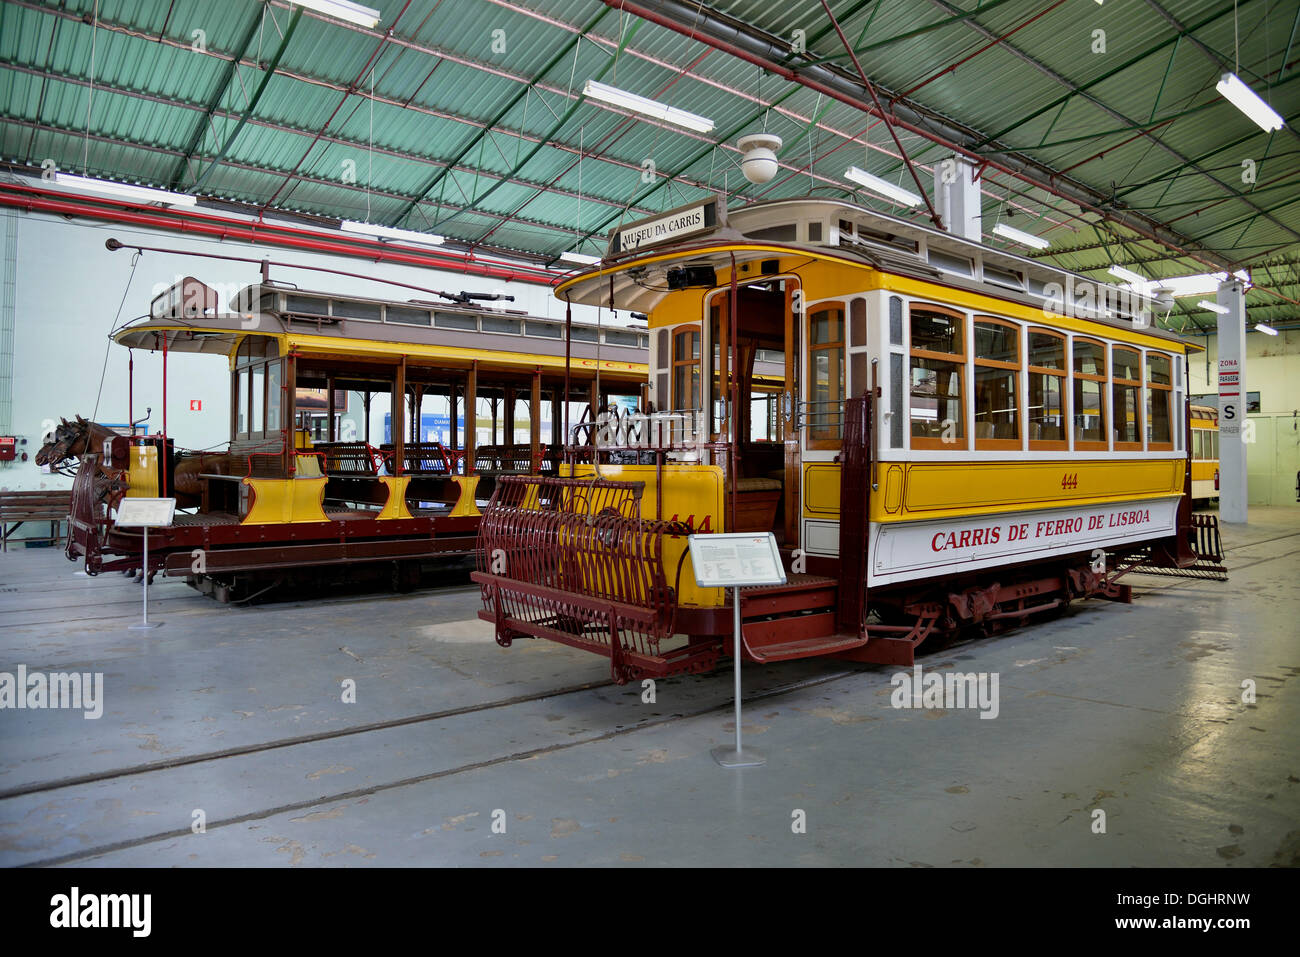 Old trams in the Museu da Carris tram museum, Lisbon, Portugal Stock Photo